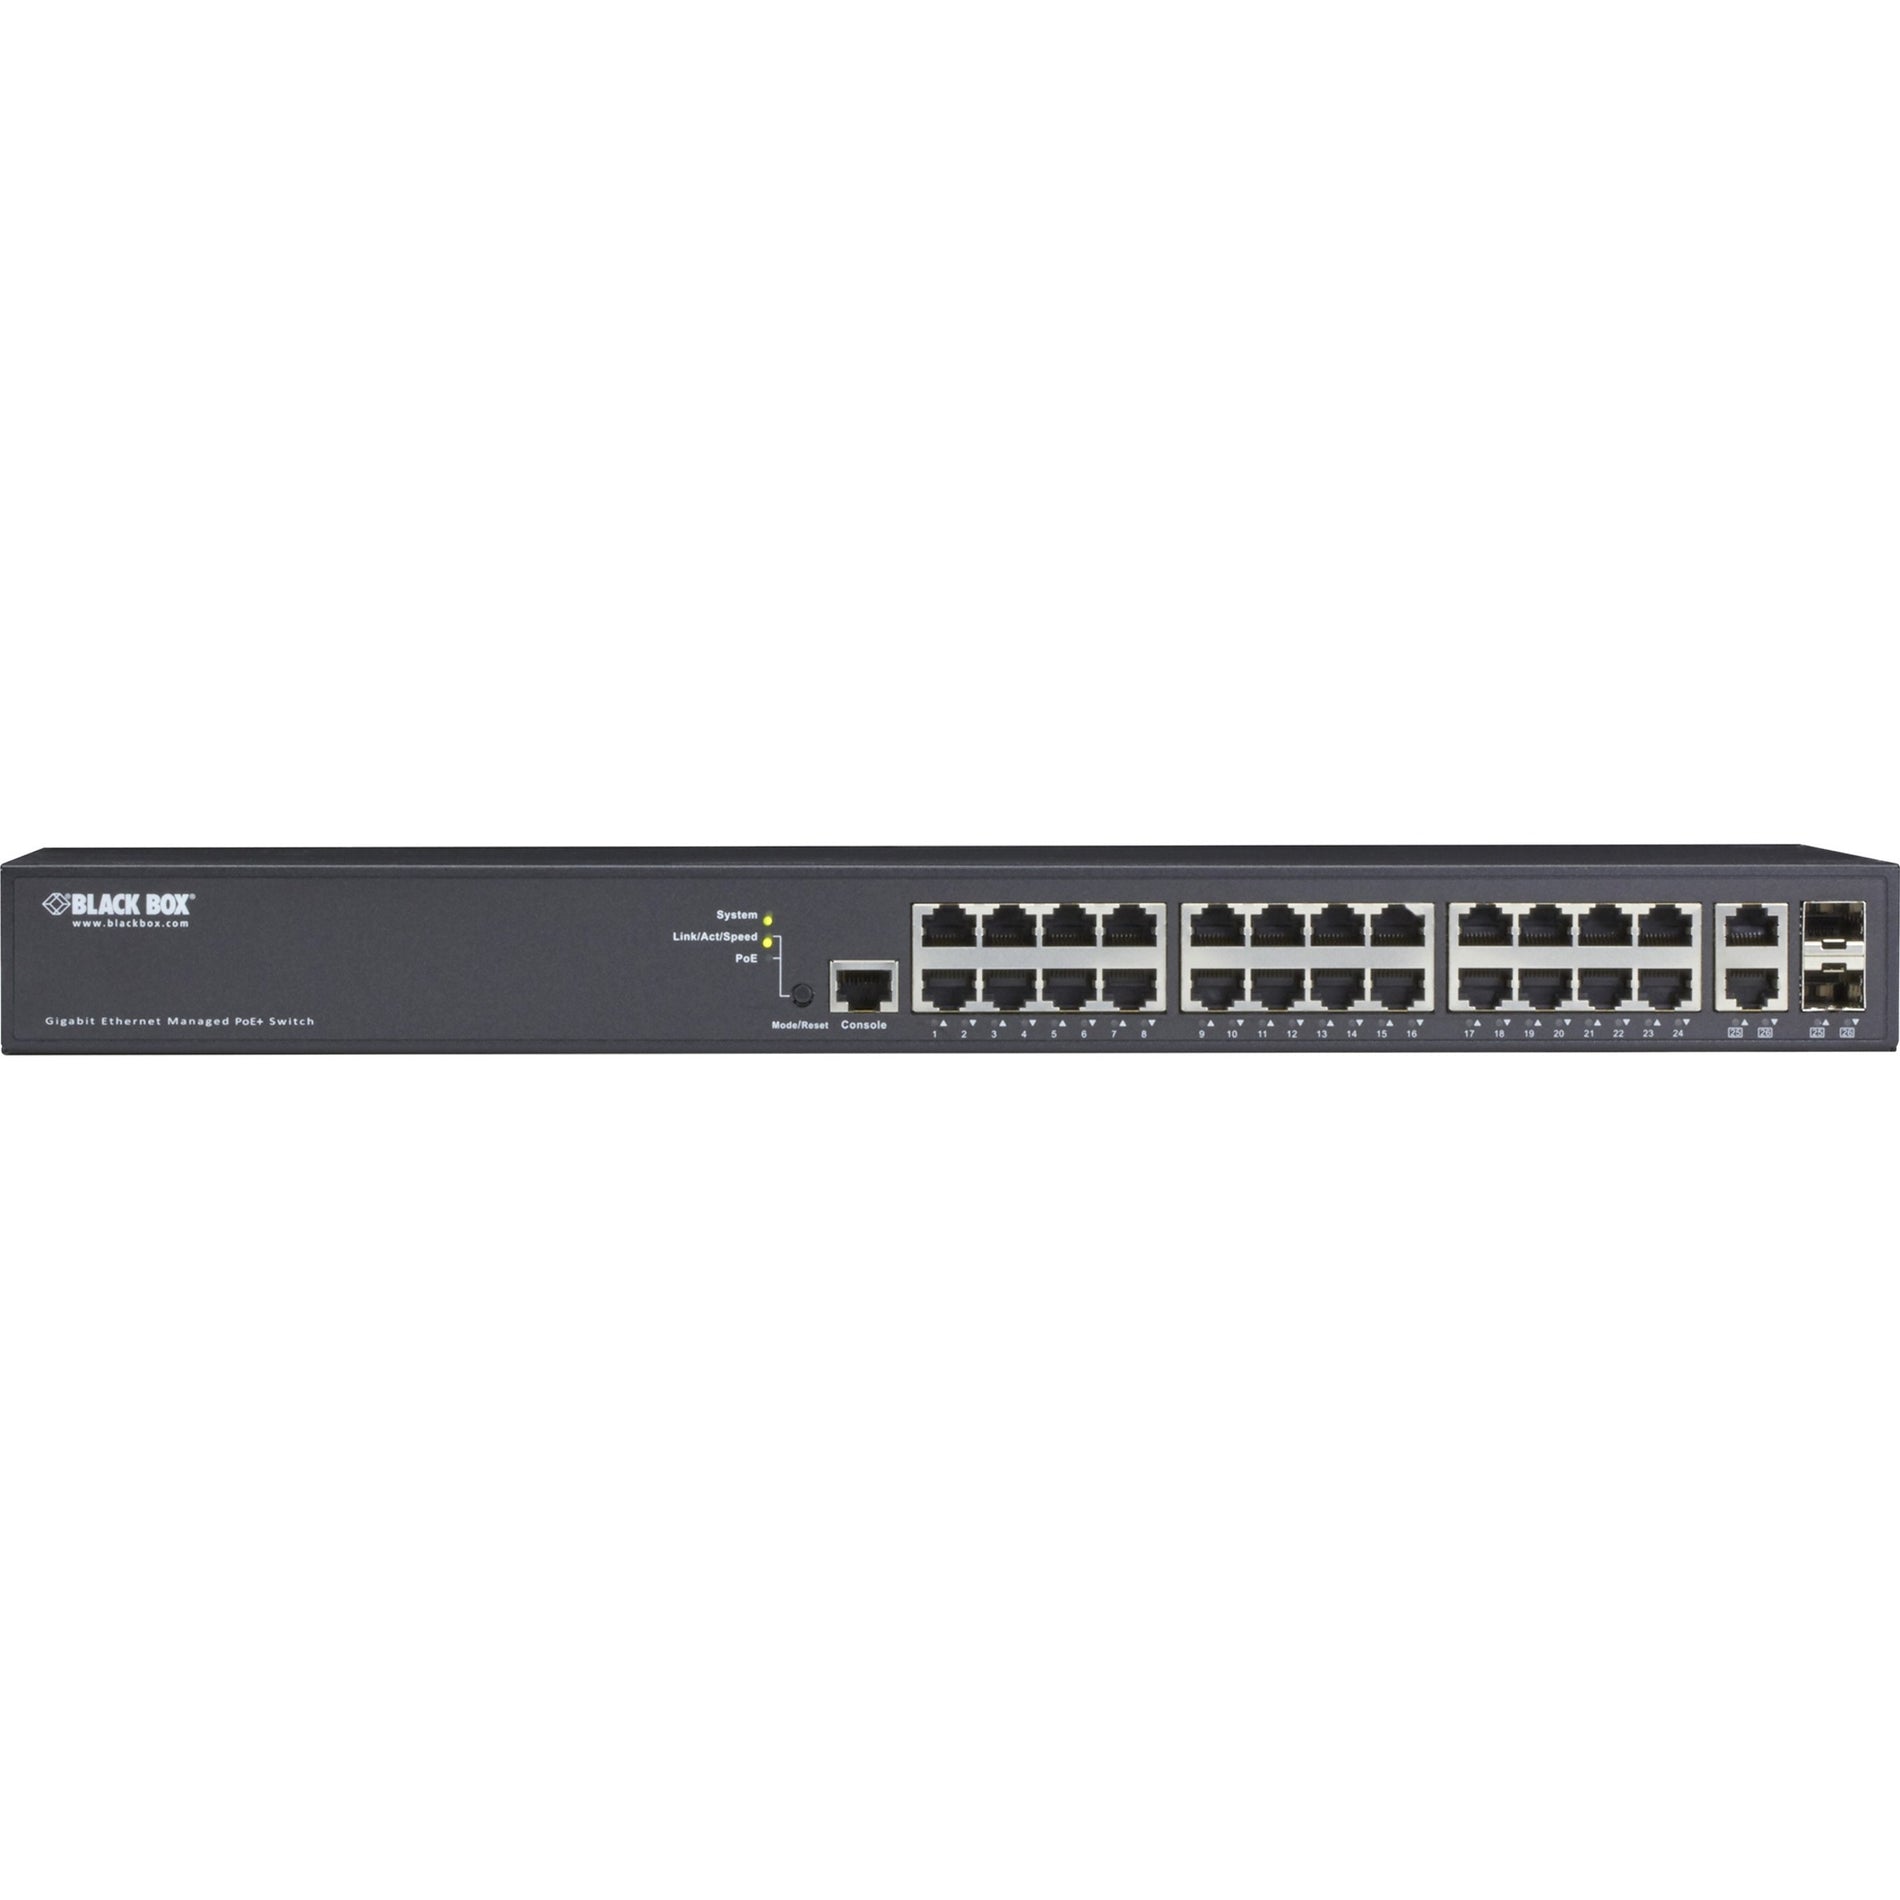 Black Box 26-Port Gigabit Ethernet Switch PoE+ Managed (LPB2926A)